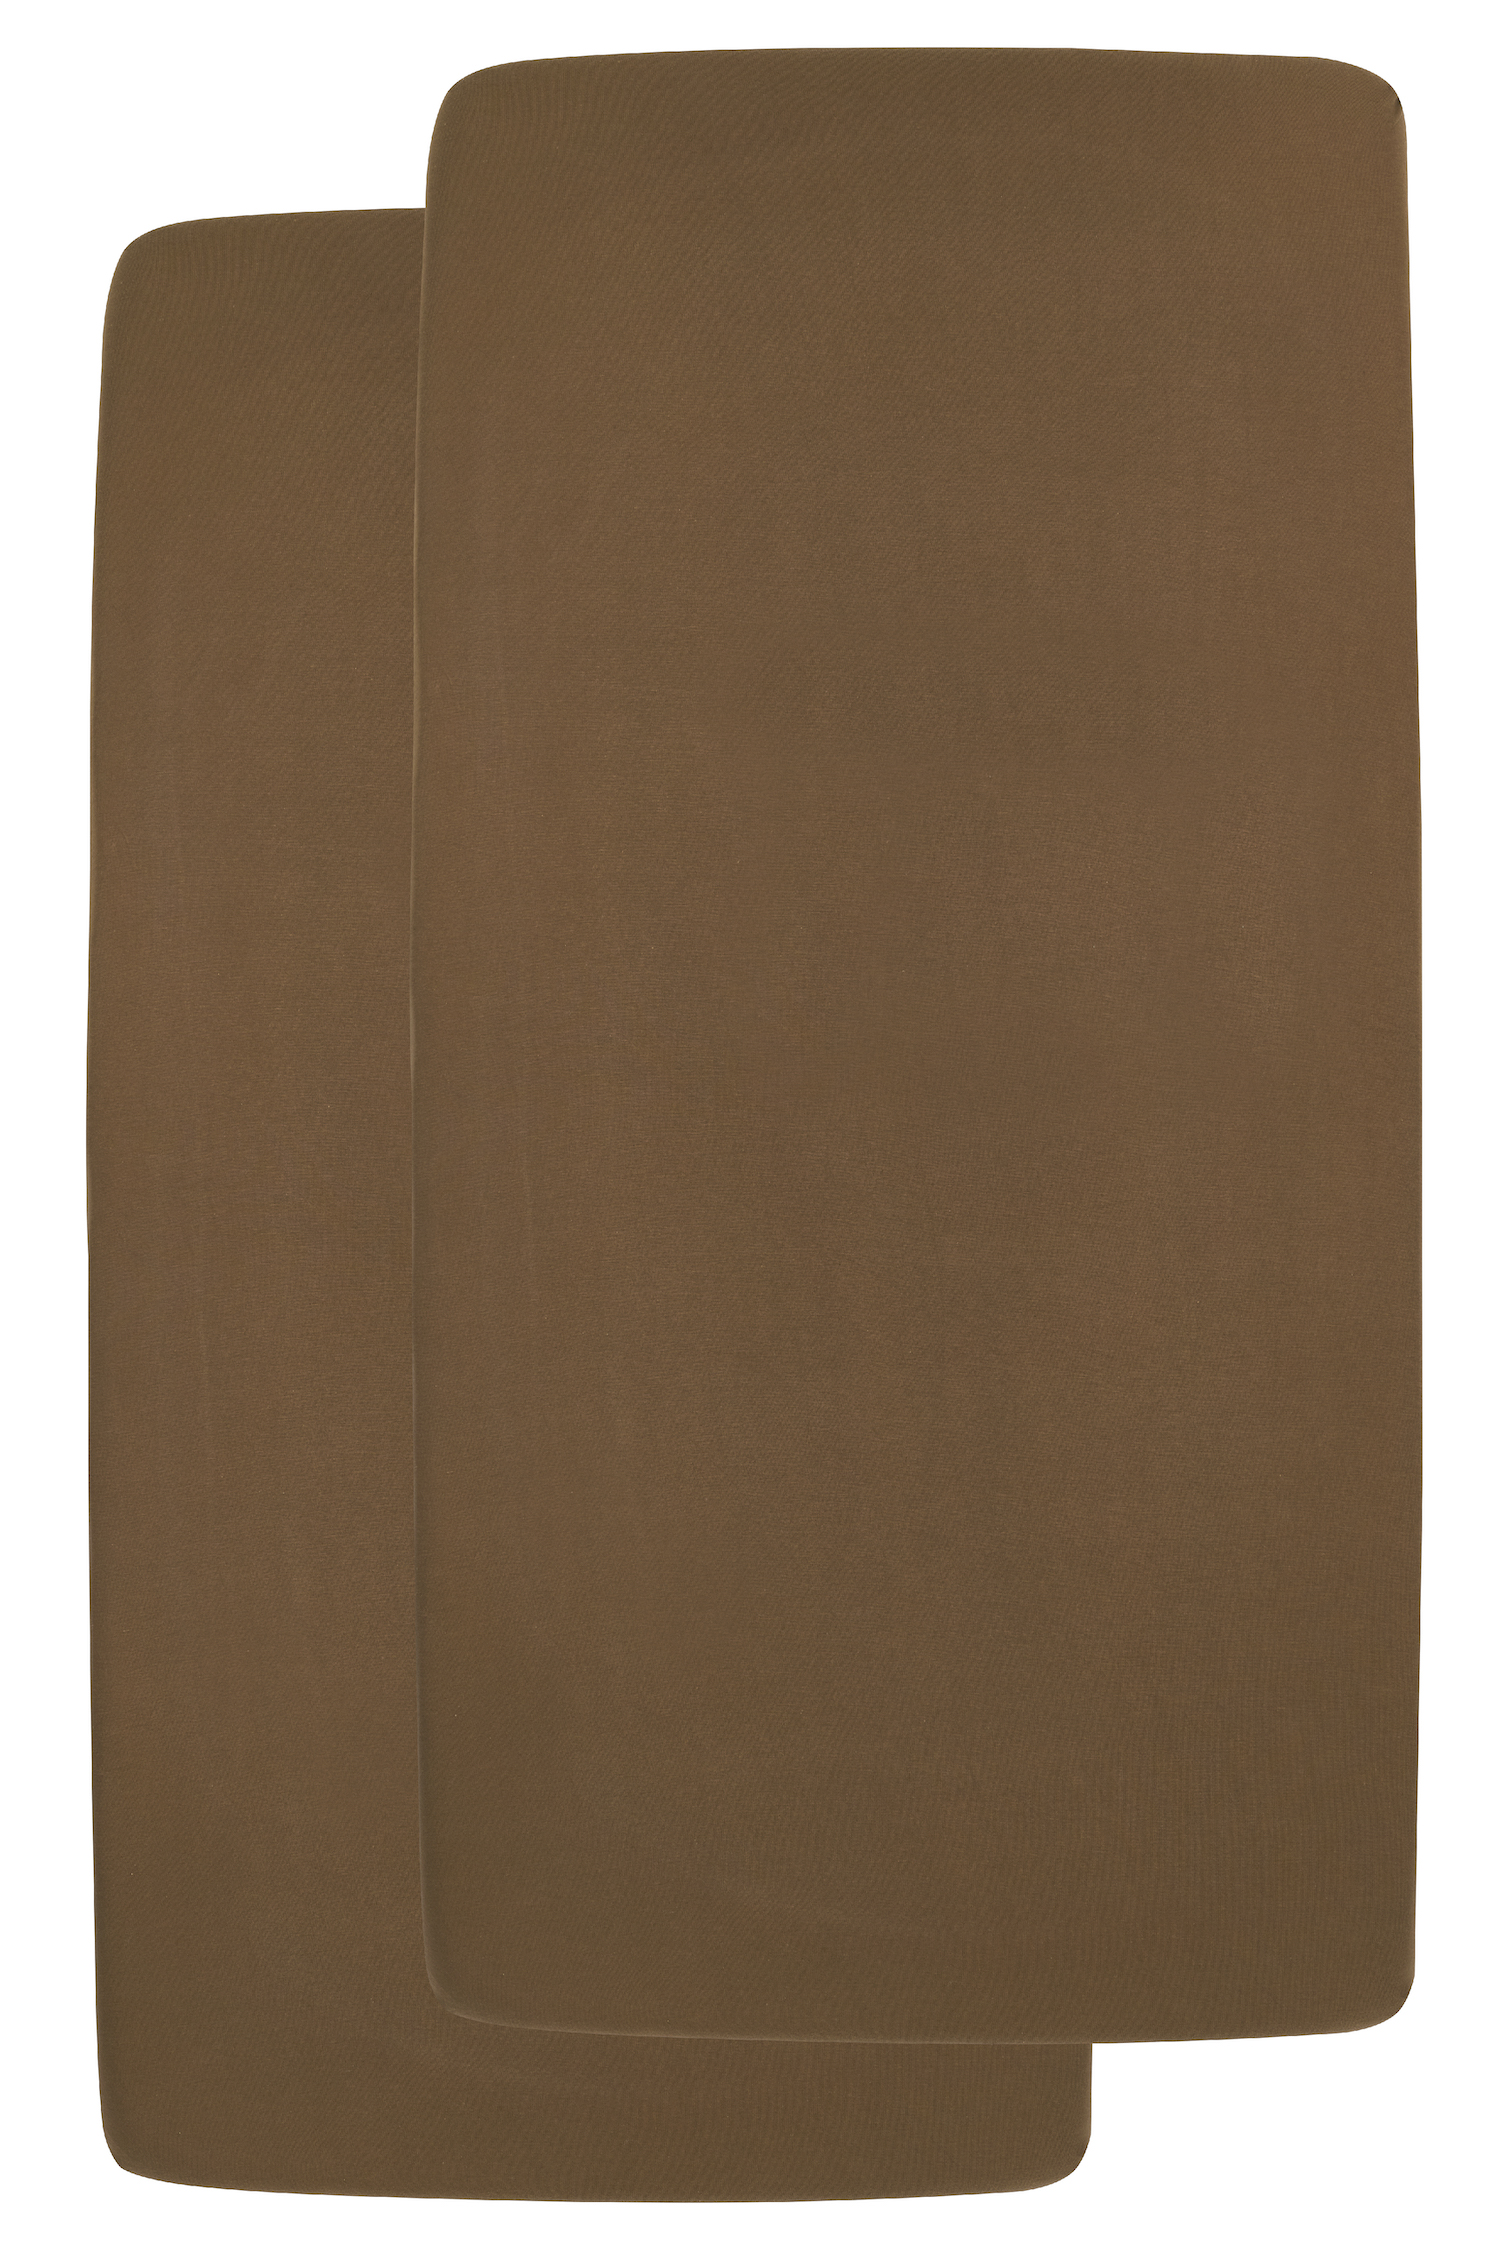 Jersey Hoeslaken Ledikant 2-Pack - Chocolate - 60x120cm